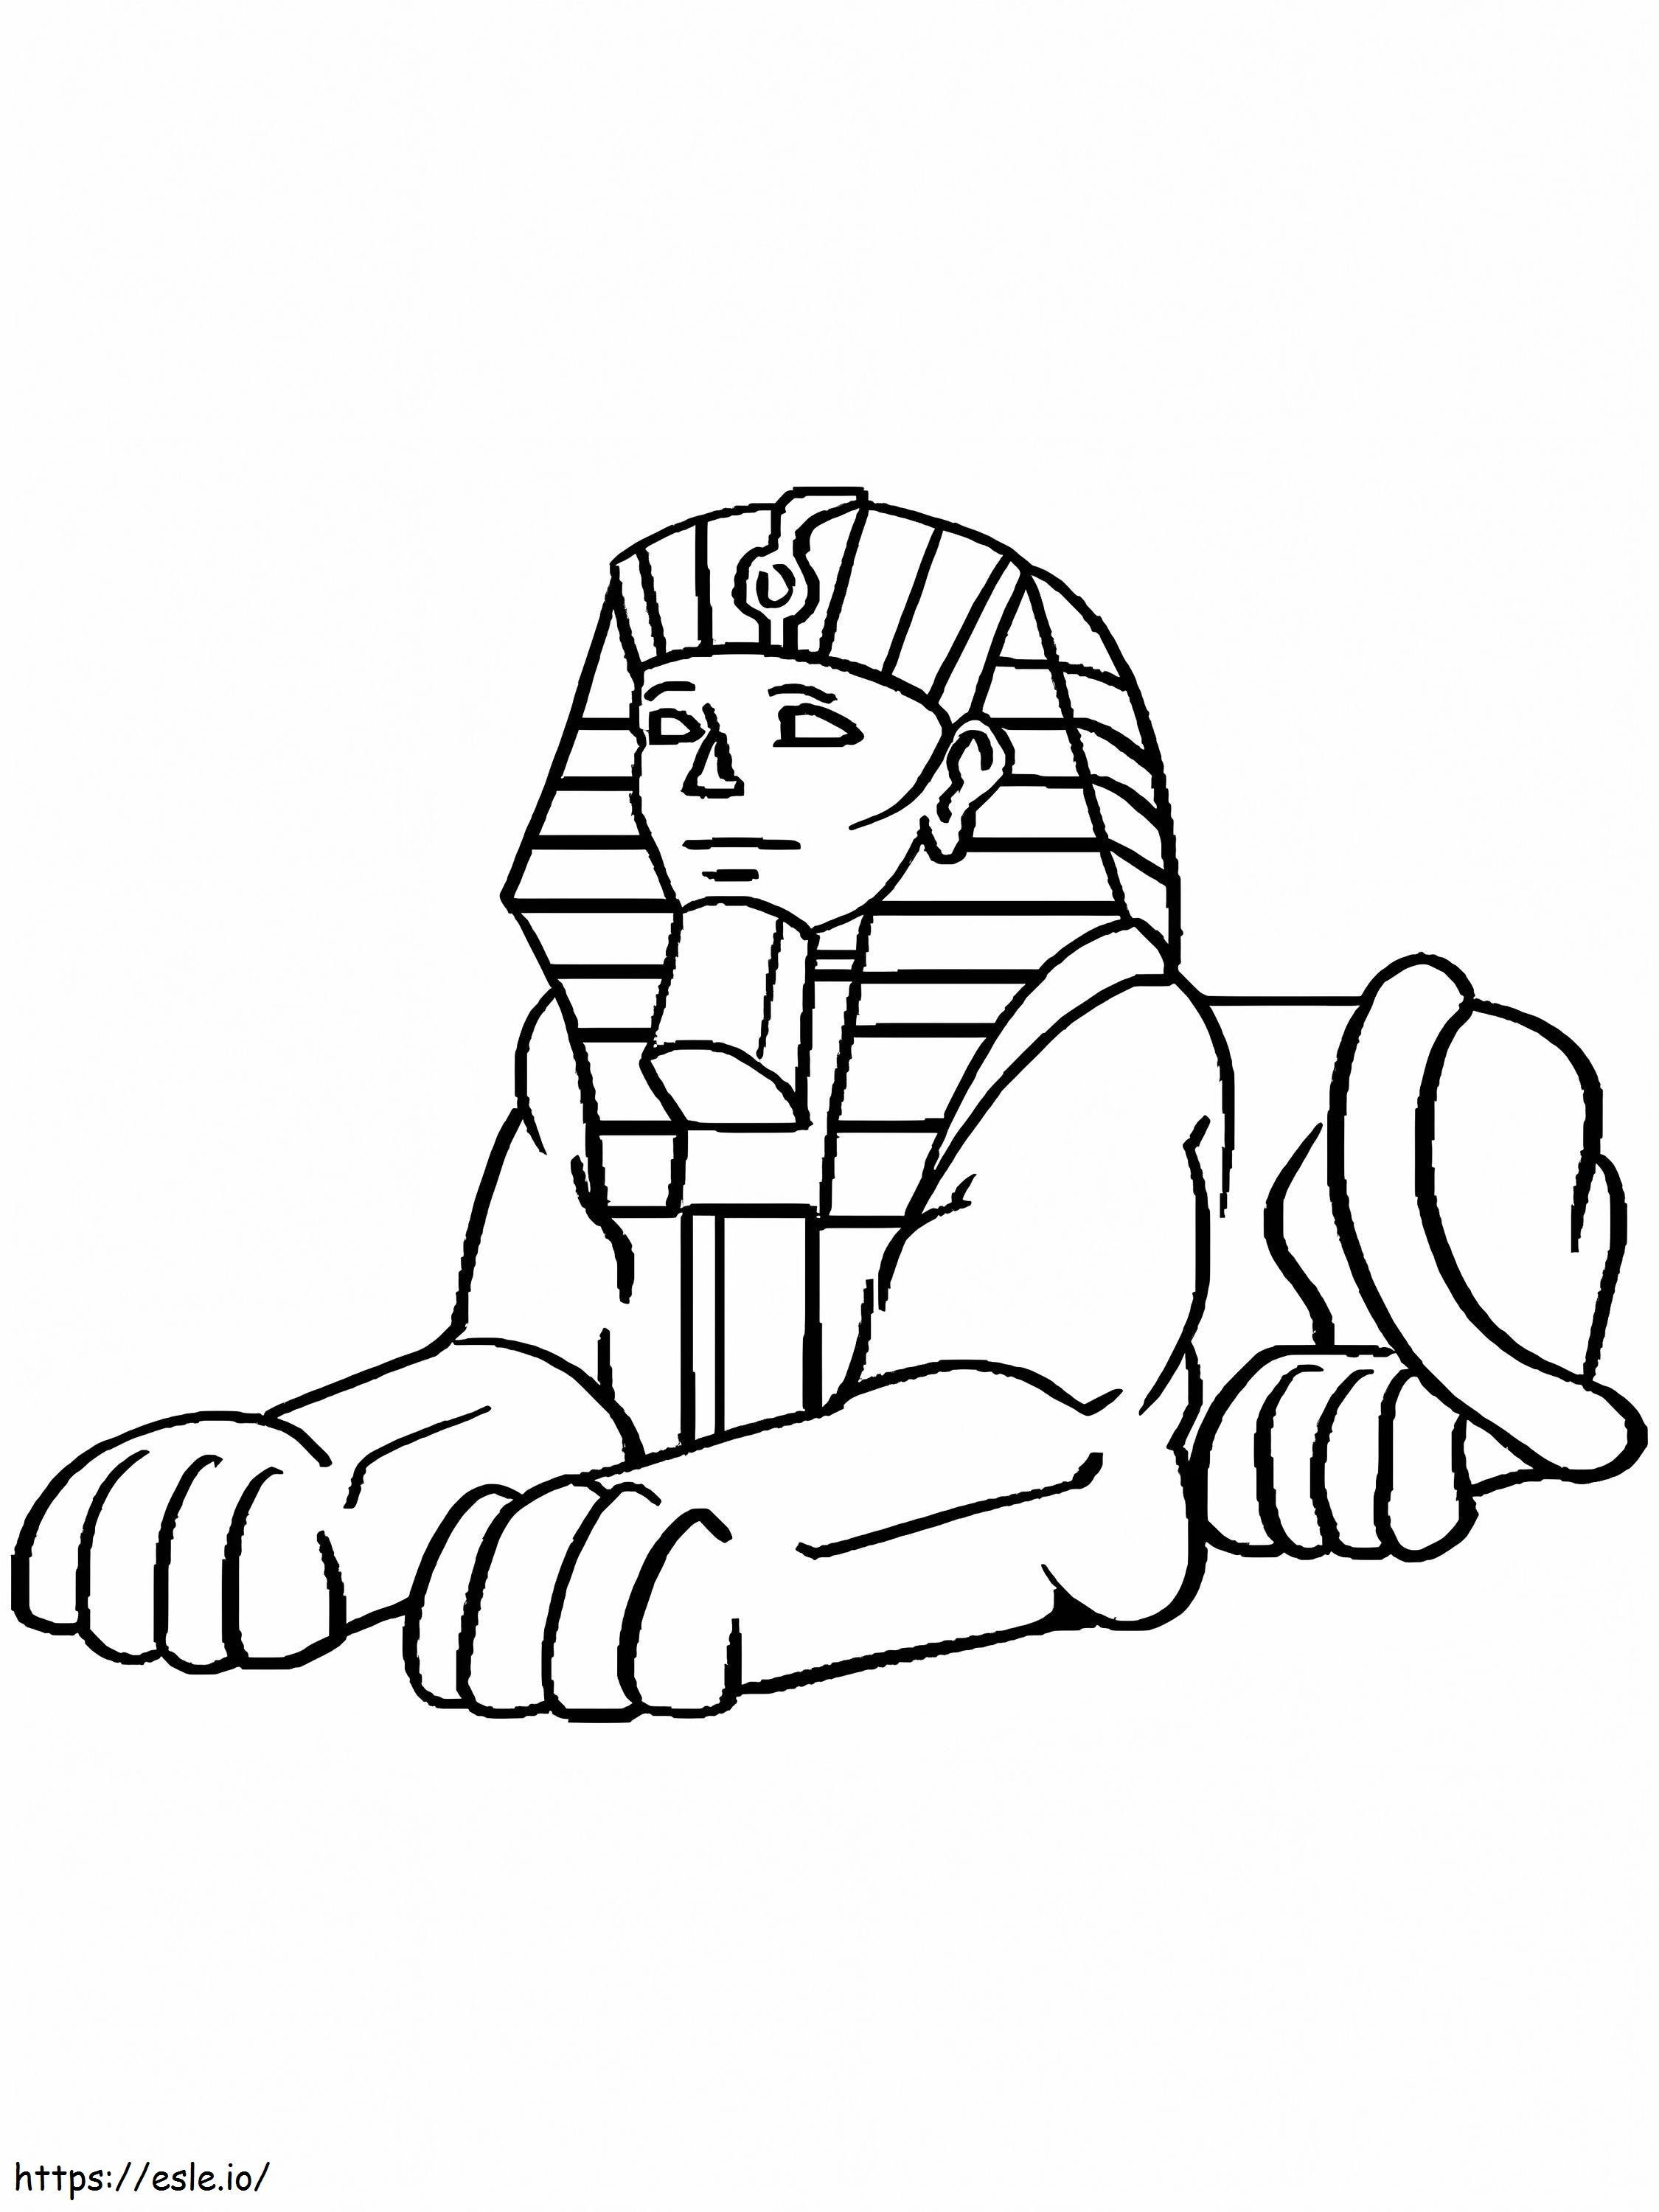 Free Printable Sphinx coloring page